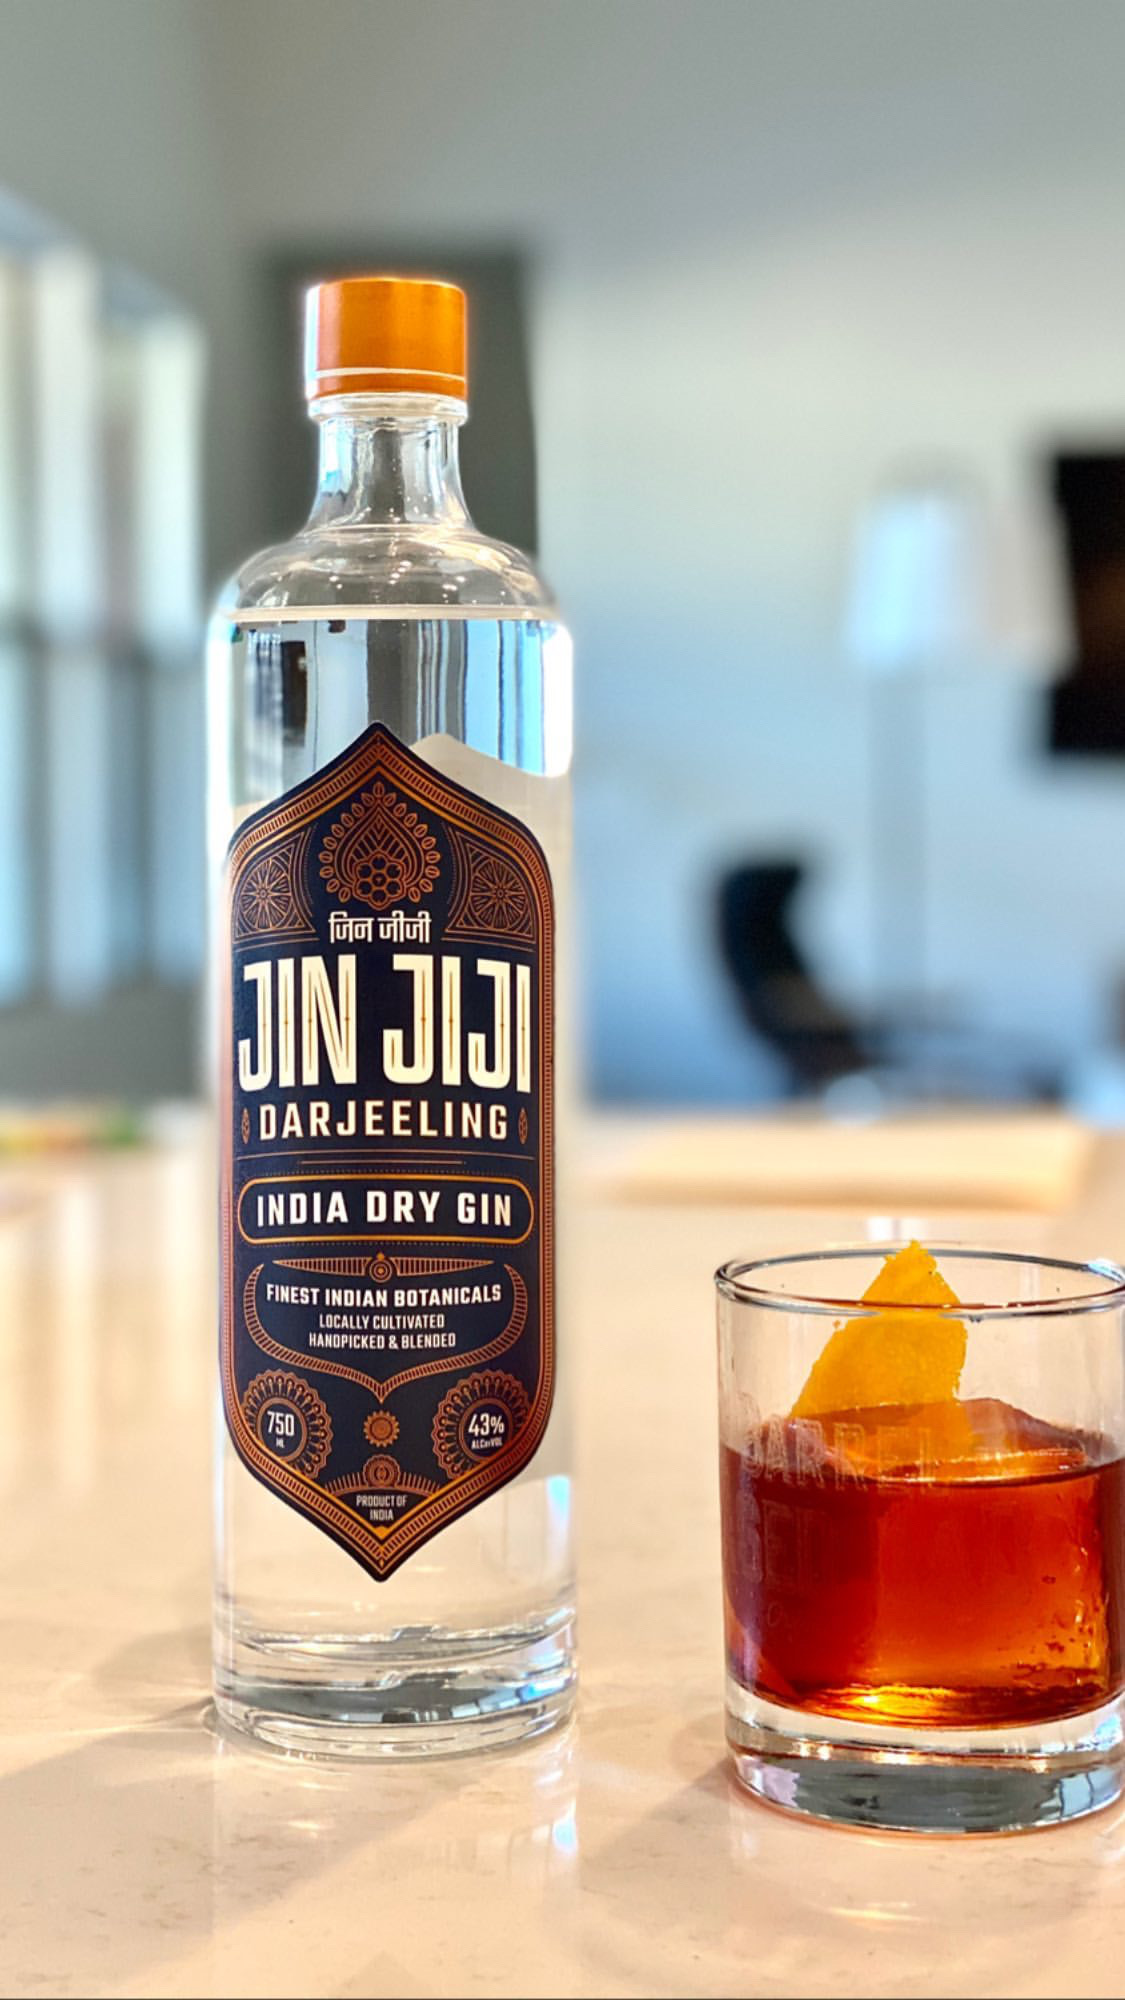 Jin JiJi Darjeeling India Dry Gin 43% 0,7l